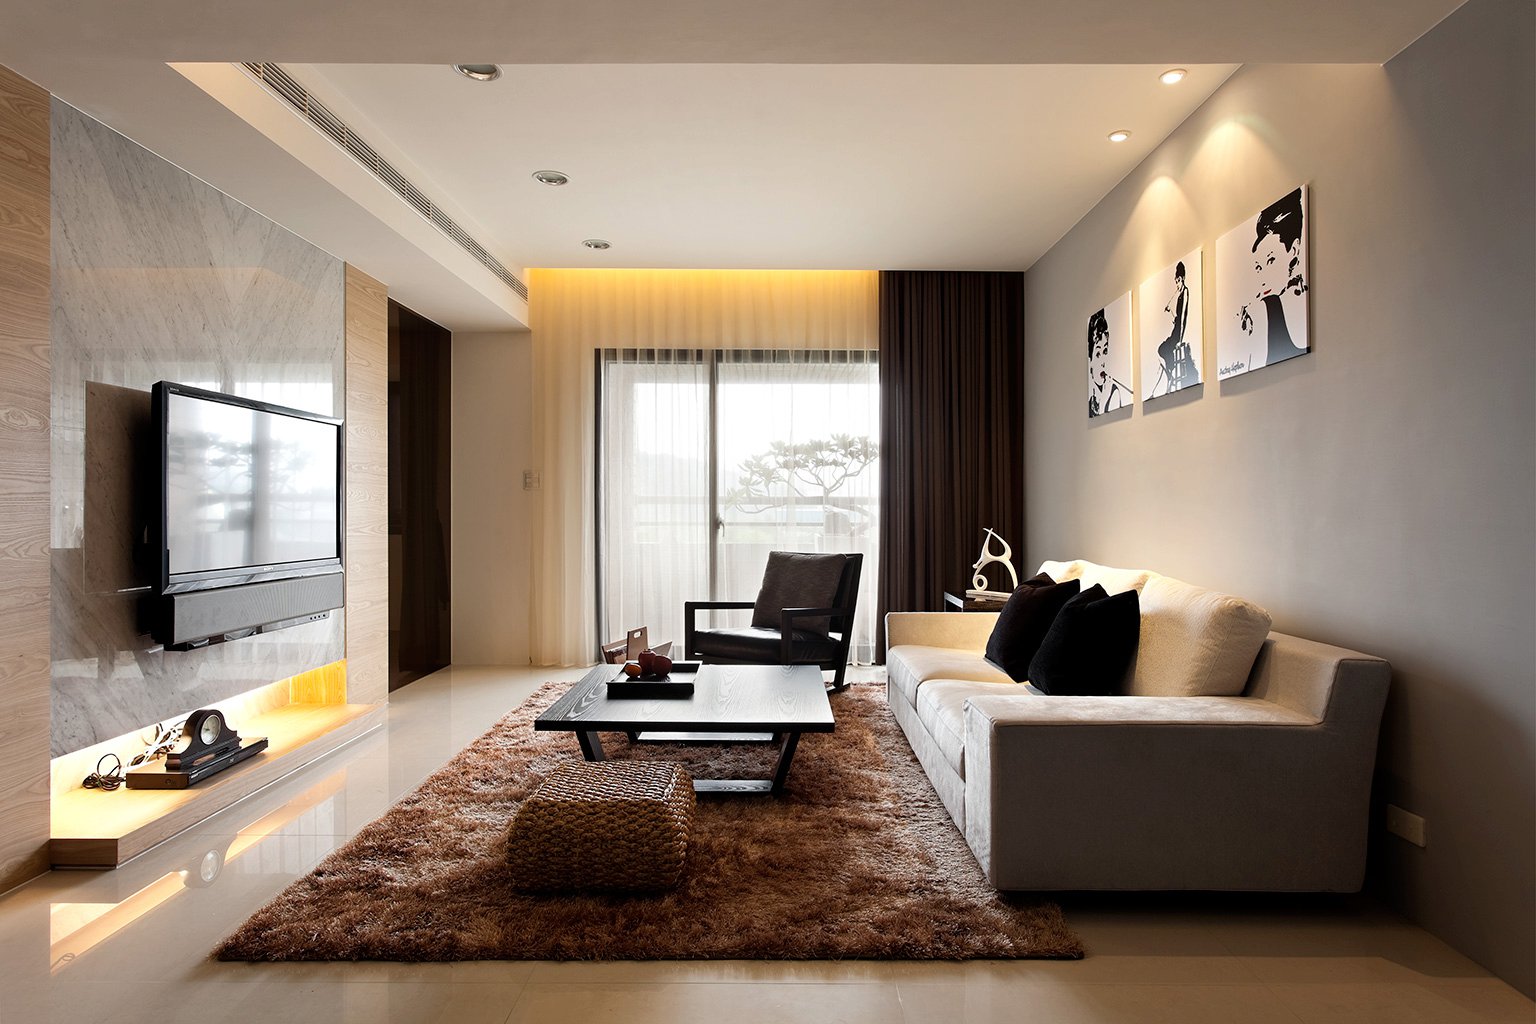 Modern Minimalist Decor With A Homey Flow, Modern Interior Design Living Room Ideas